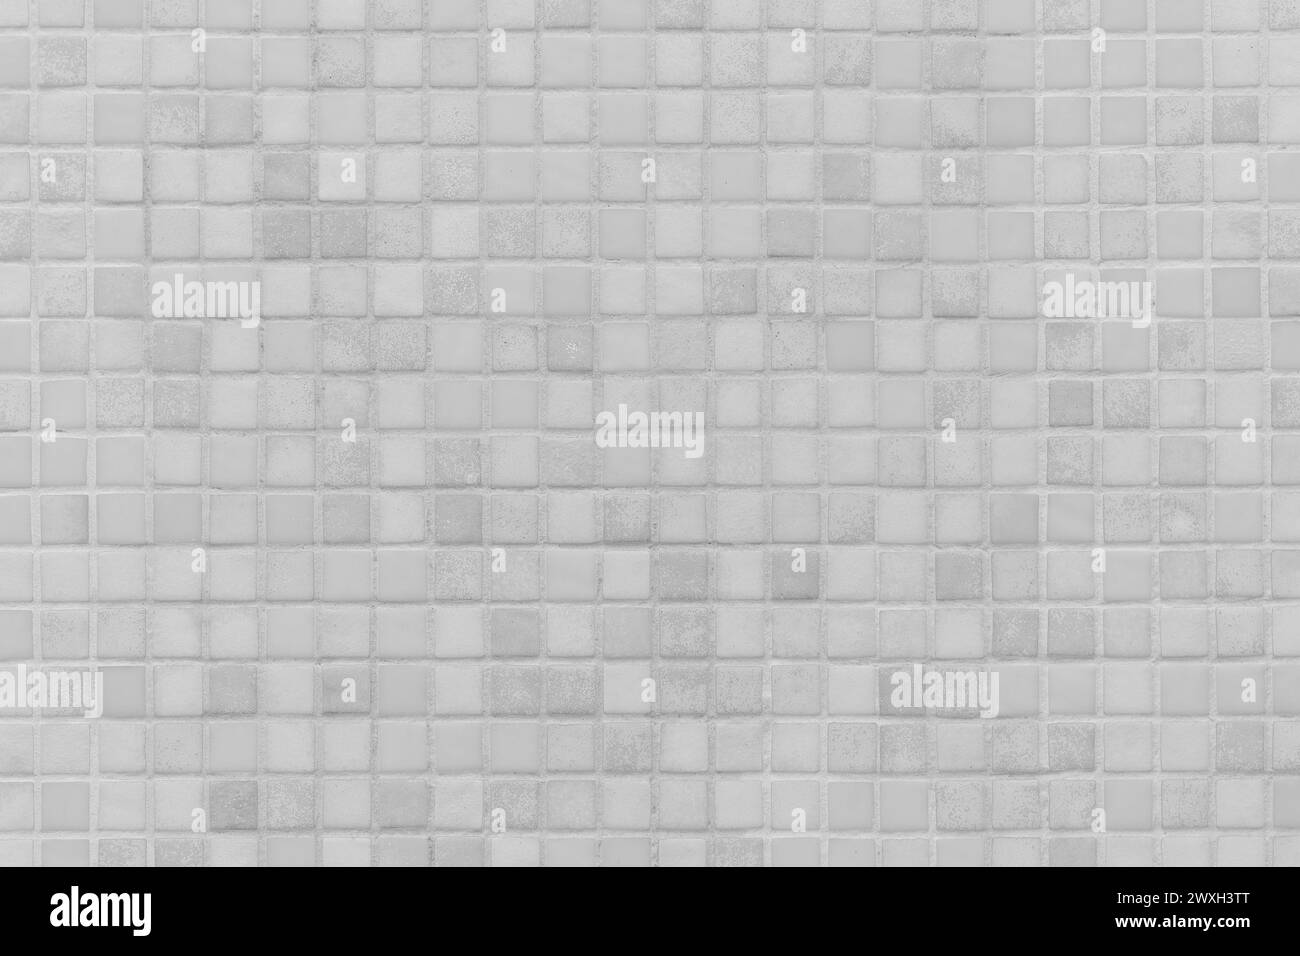 Ceramic Mosaic Tile Square Color Light White Wall Texture Background Bathroom Toilet Floor Backdrop Bath. Stock Photo